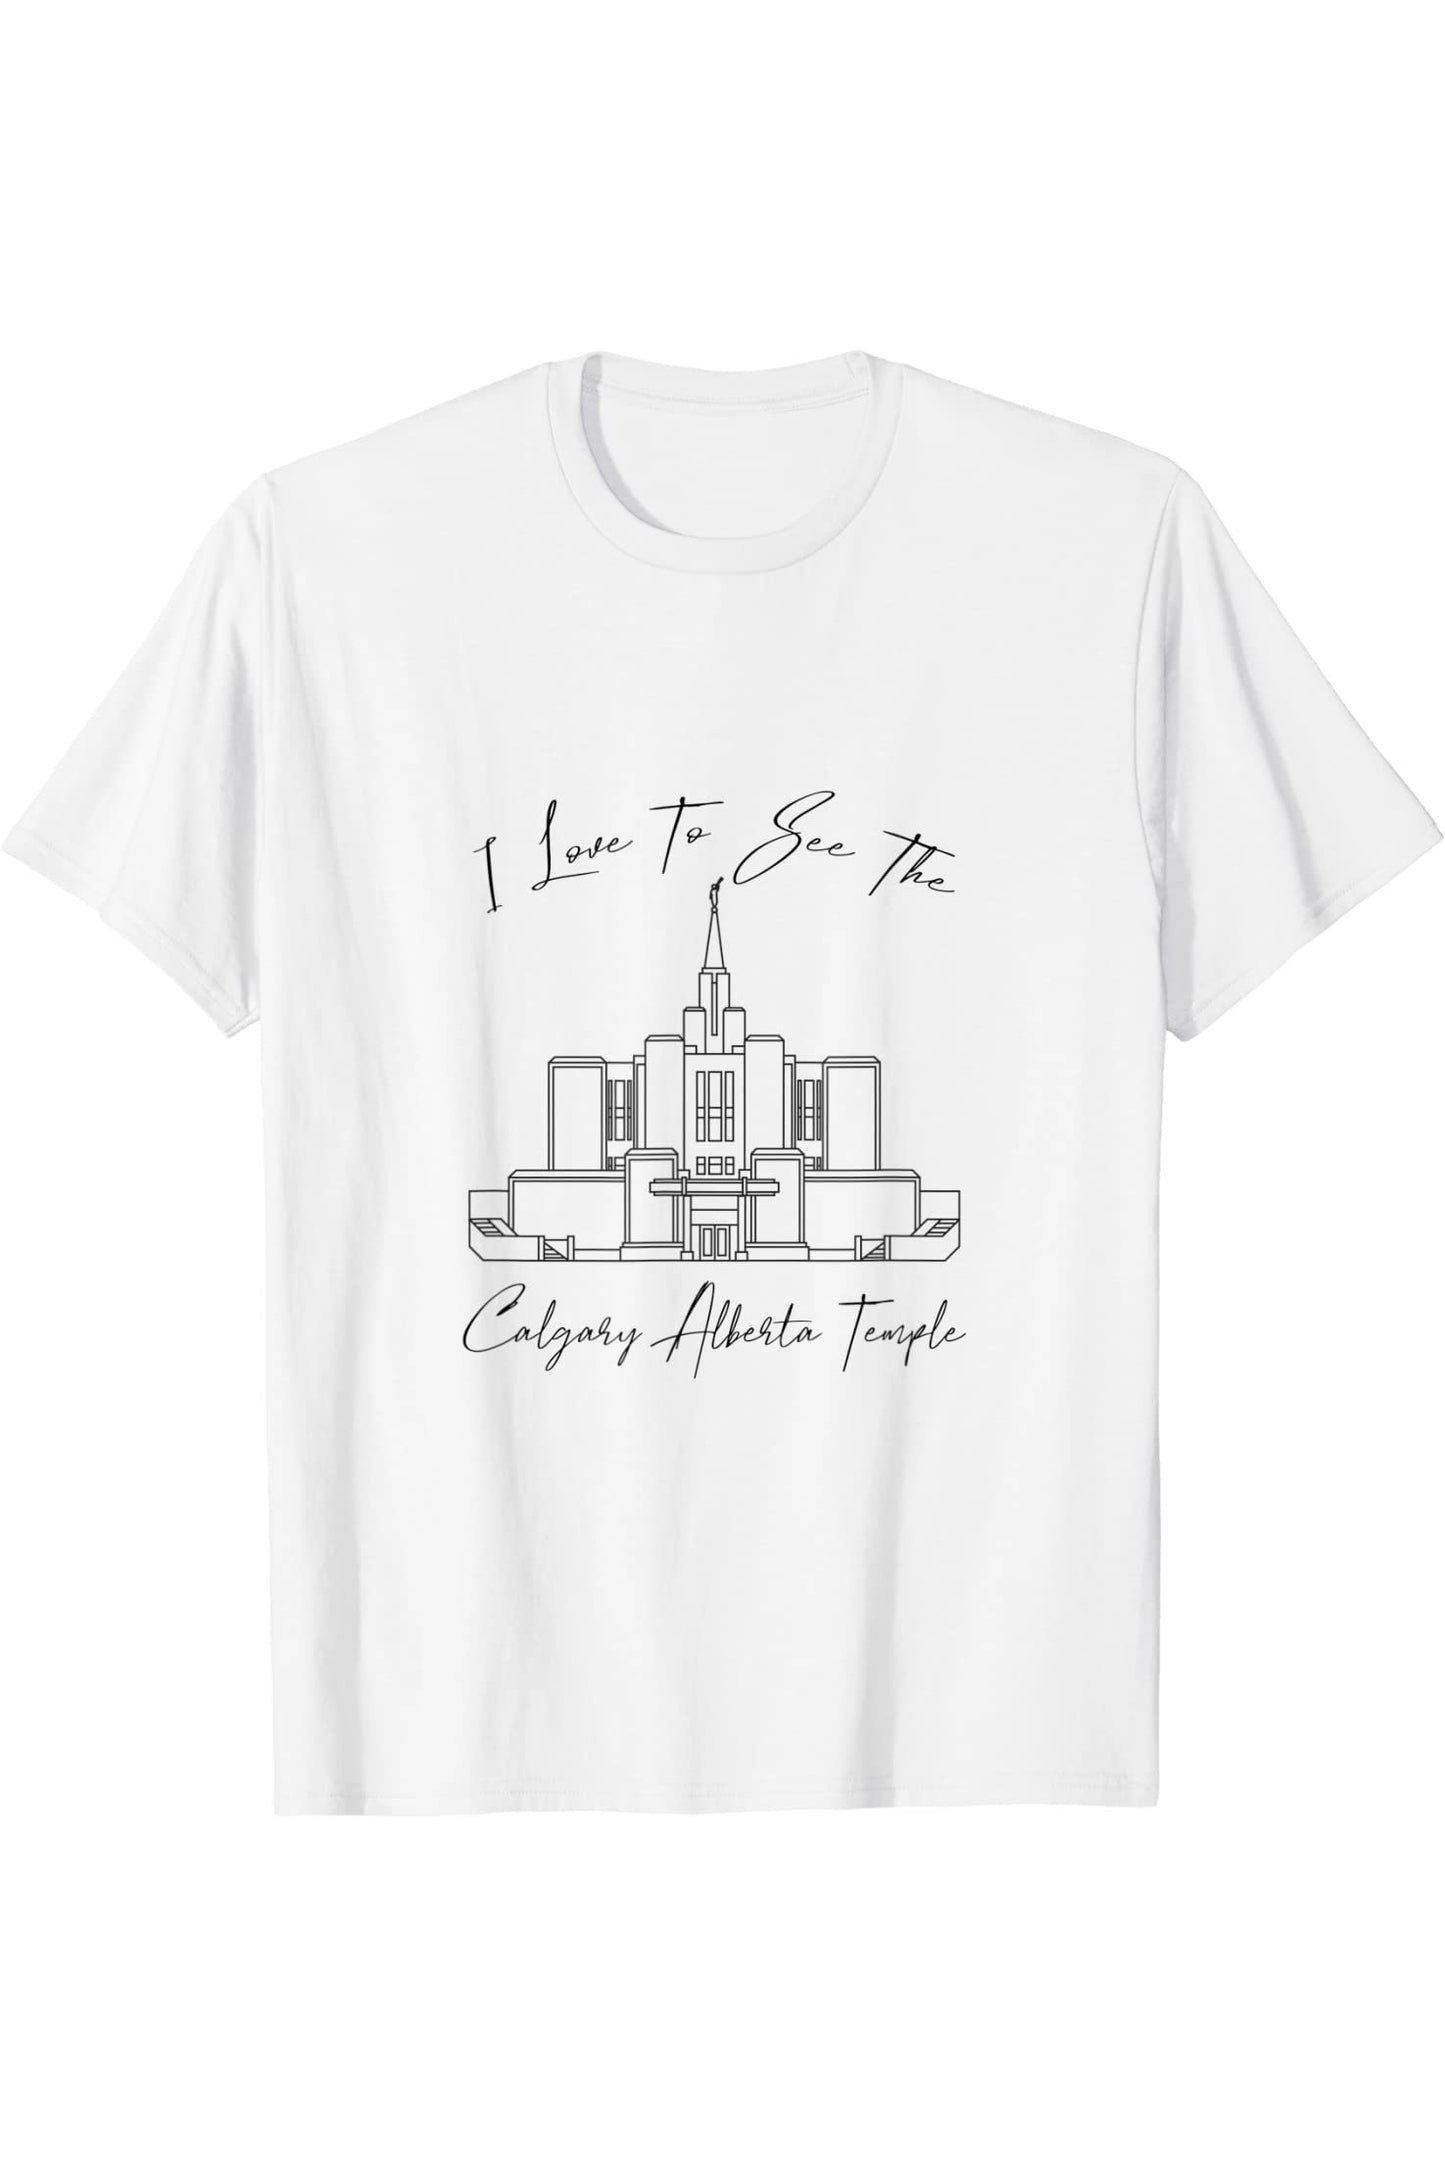 Calgary Alberta Temple T-Shirt - Calligraphy Style (English) US